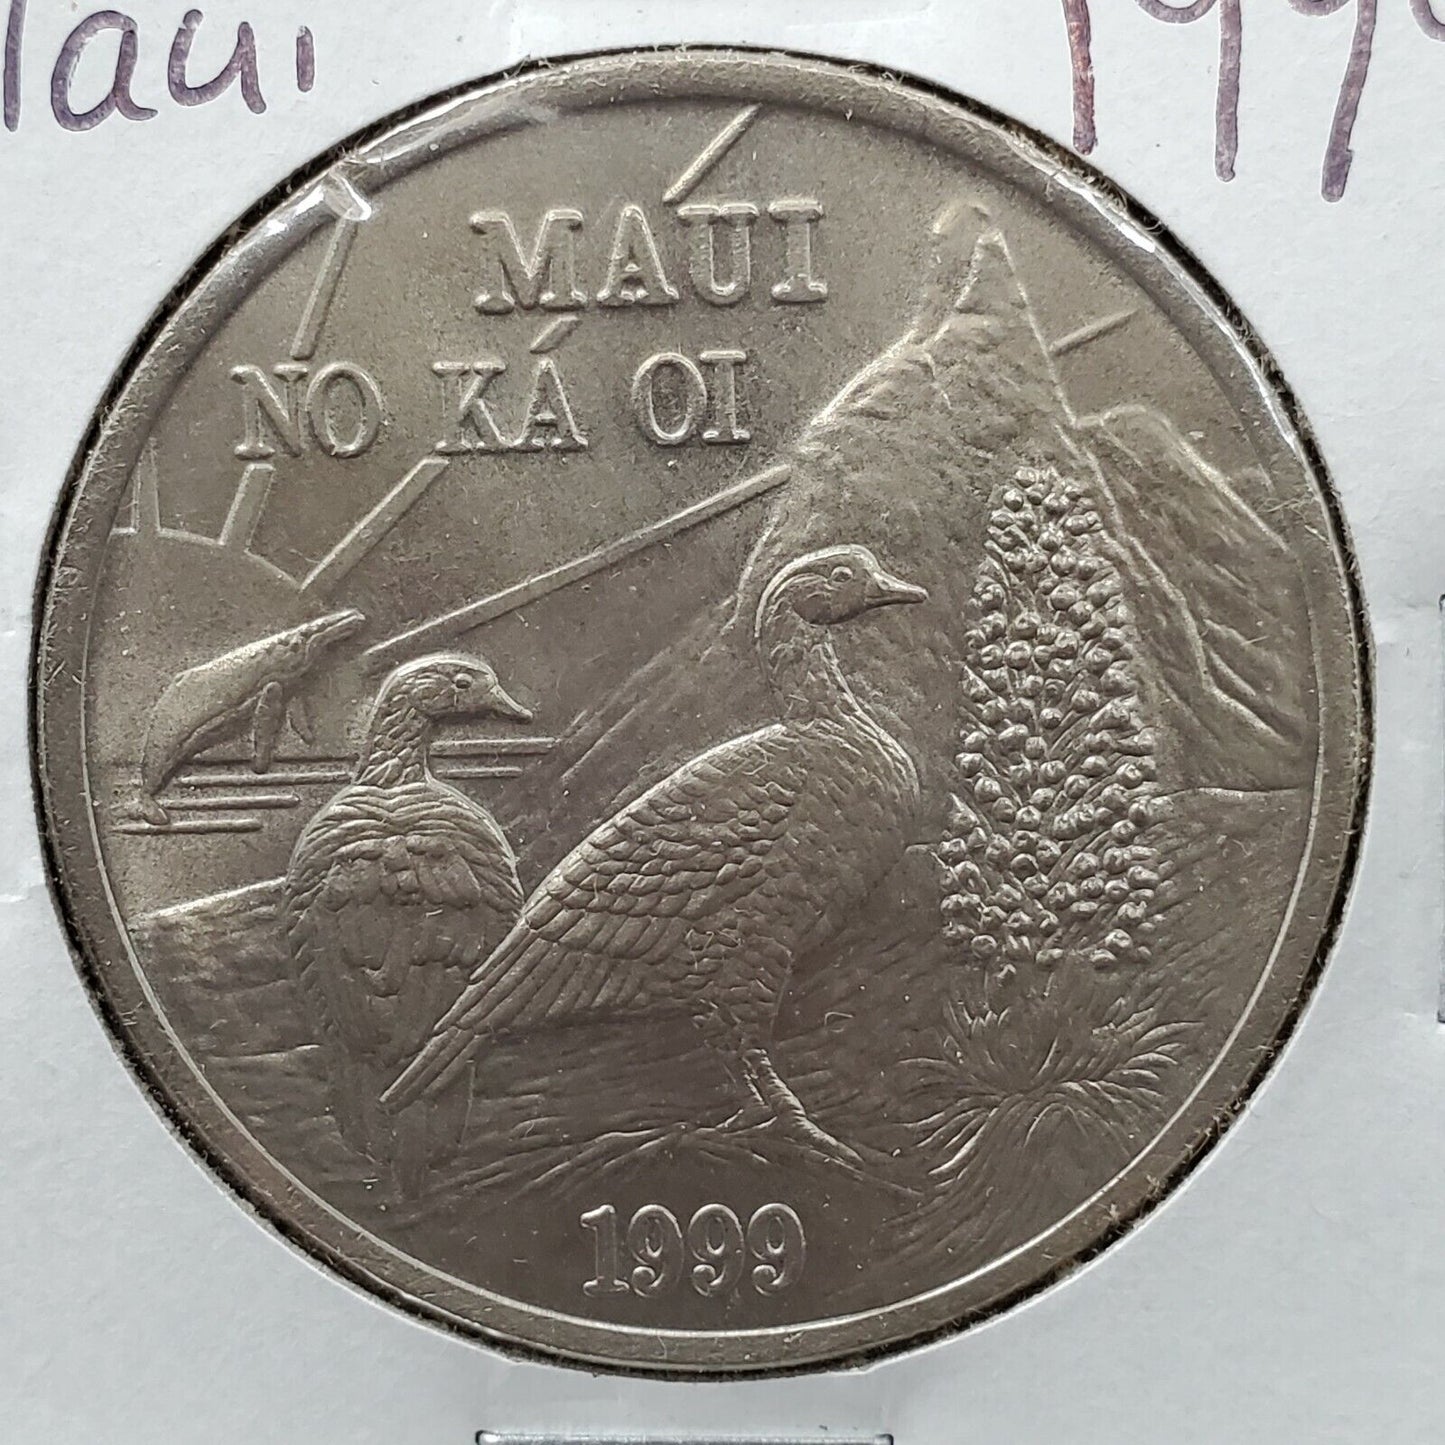 1999 Maui No Ka Oi One The Valley Isle Trade Dollar Hawaii Coin